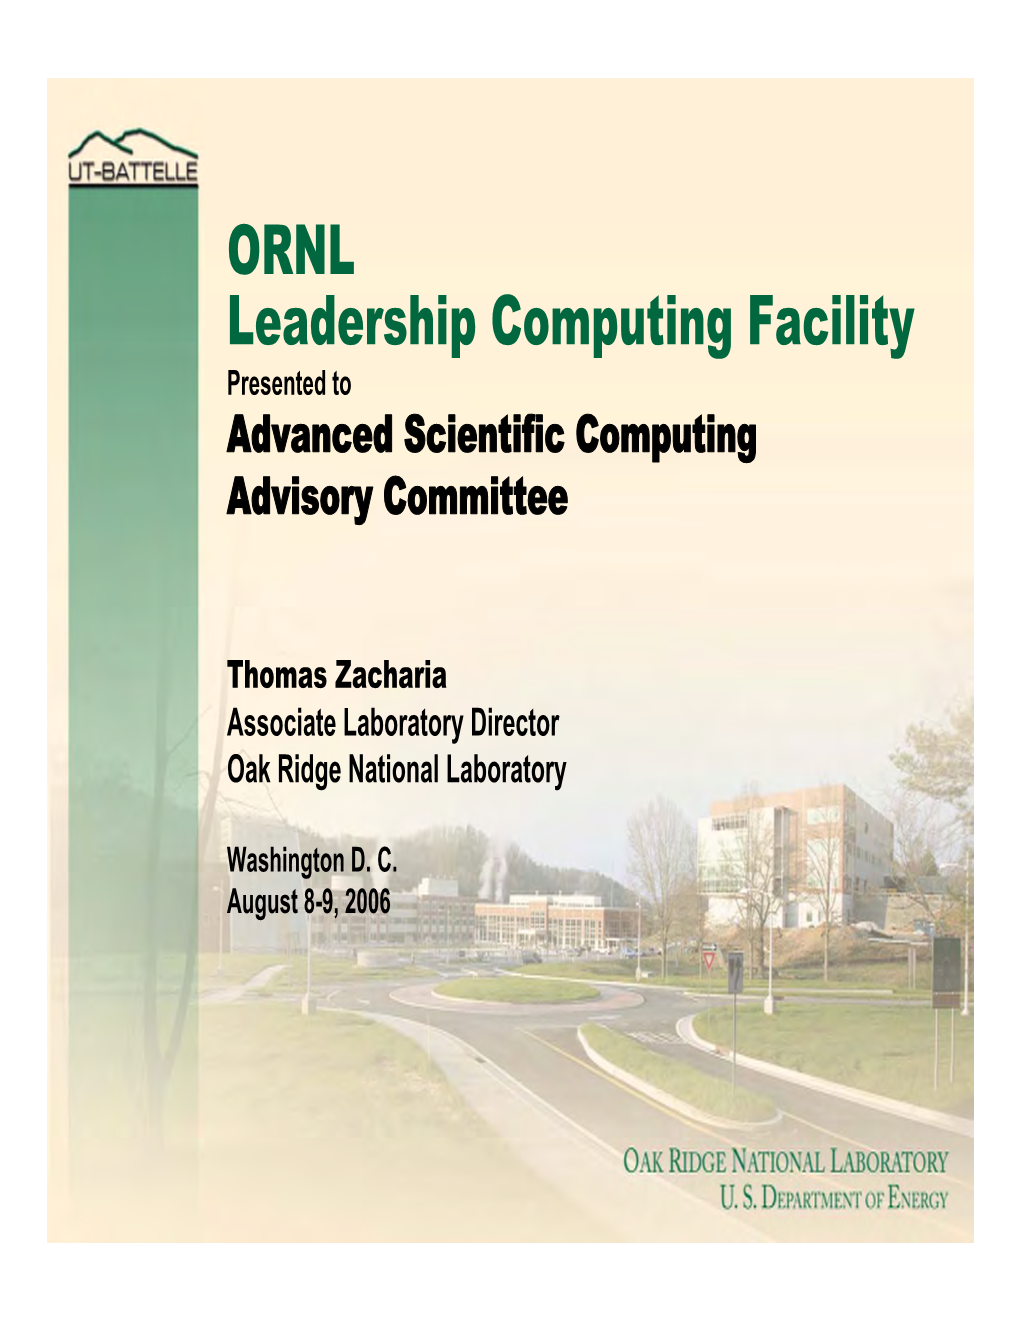 ORNL Leadership Computing Facility Presented to Advanced Scientific Computing Advisory Committee